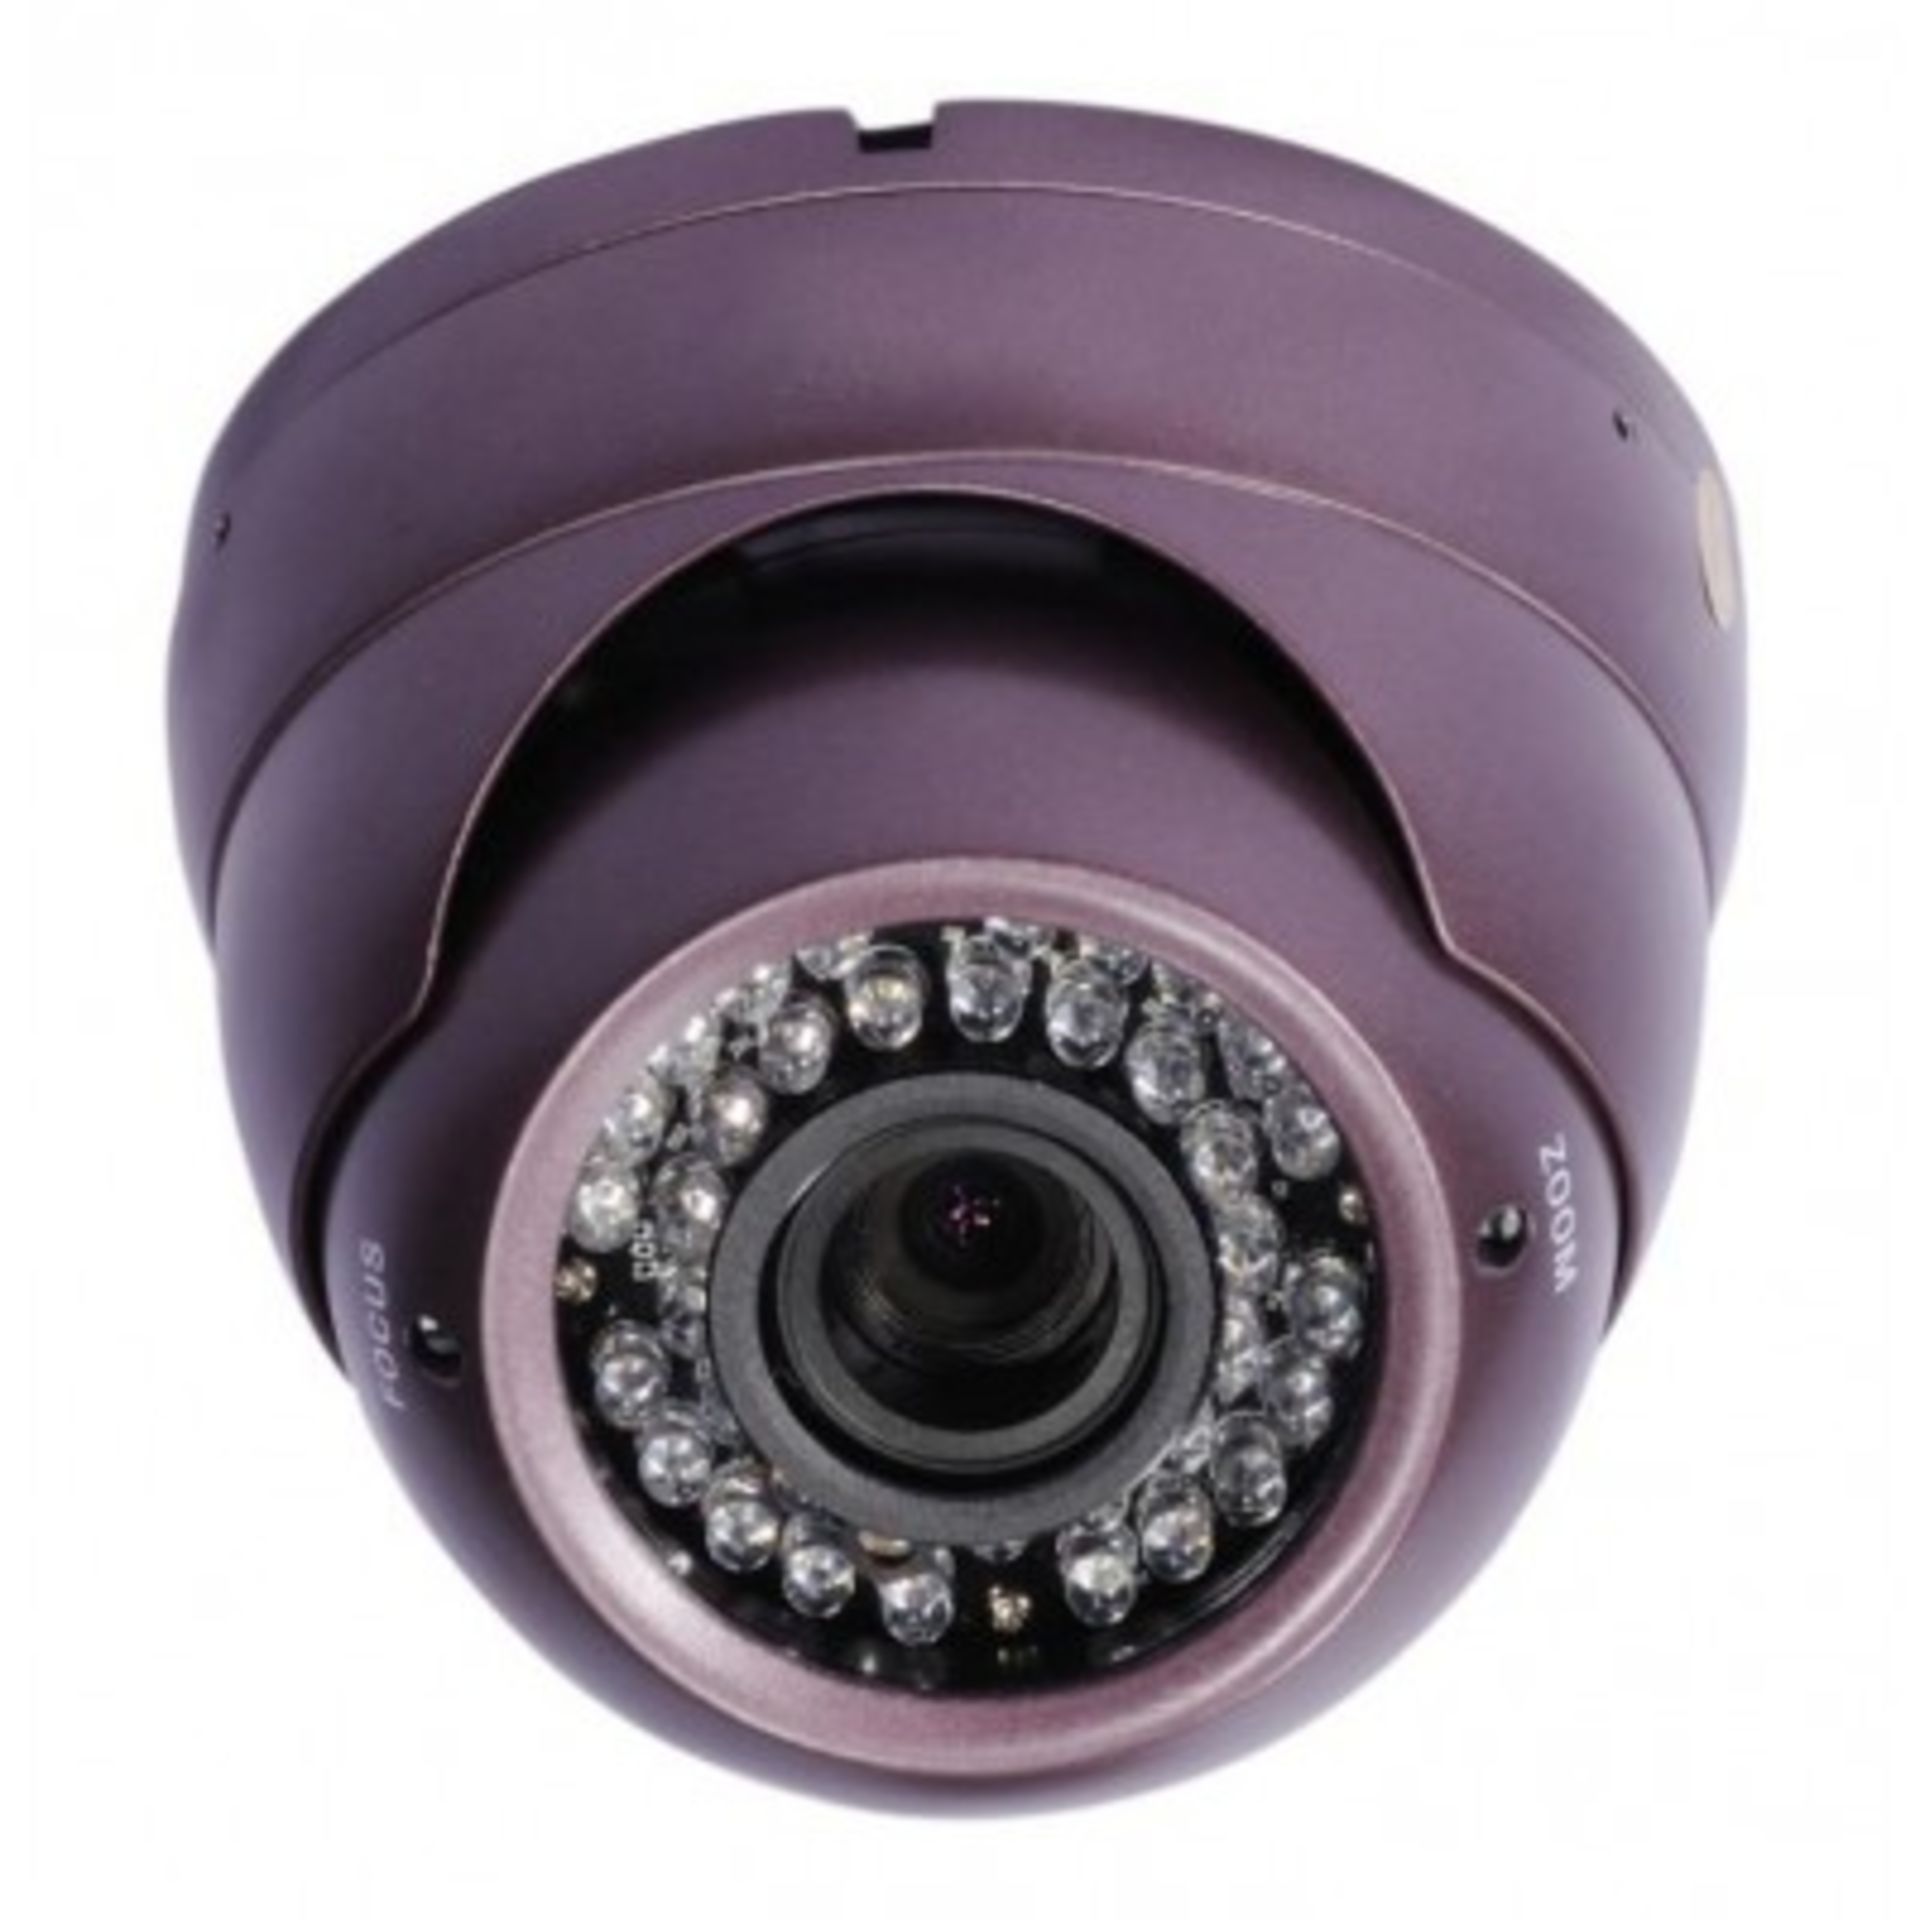 V Brand New Avtech Dome Camera- 1/3" Sony Colour CCD 540TVL Vandal Proof LP66- purple X 2 YOUR BID